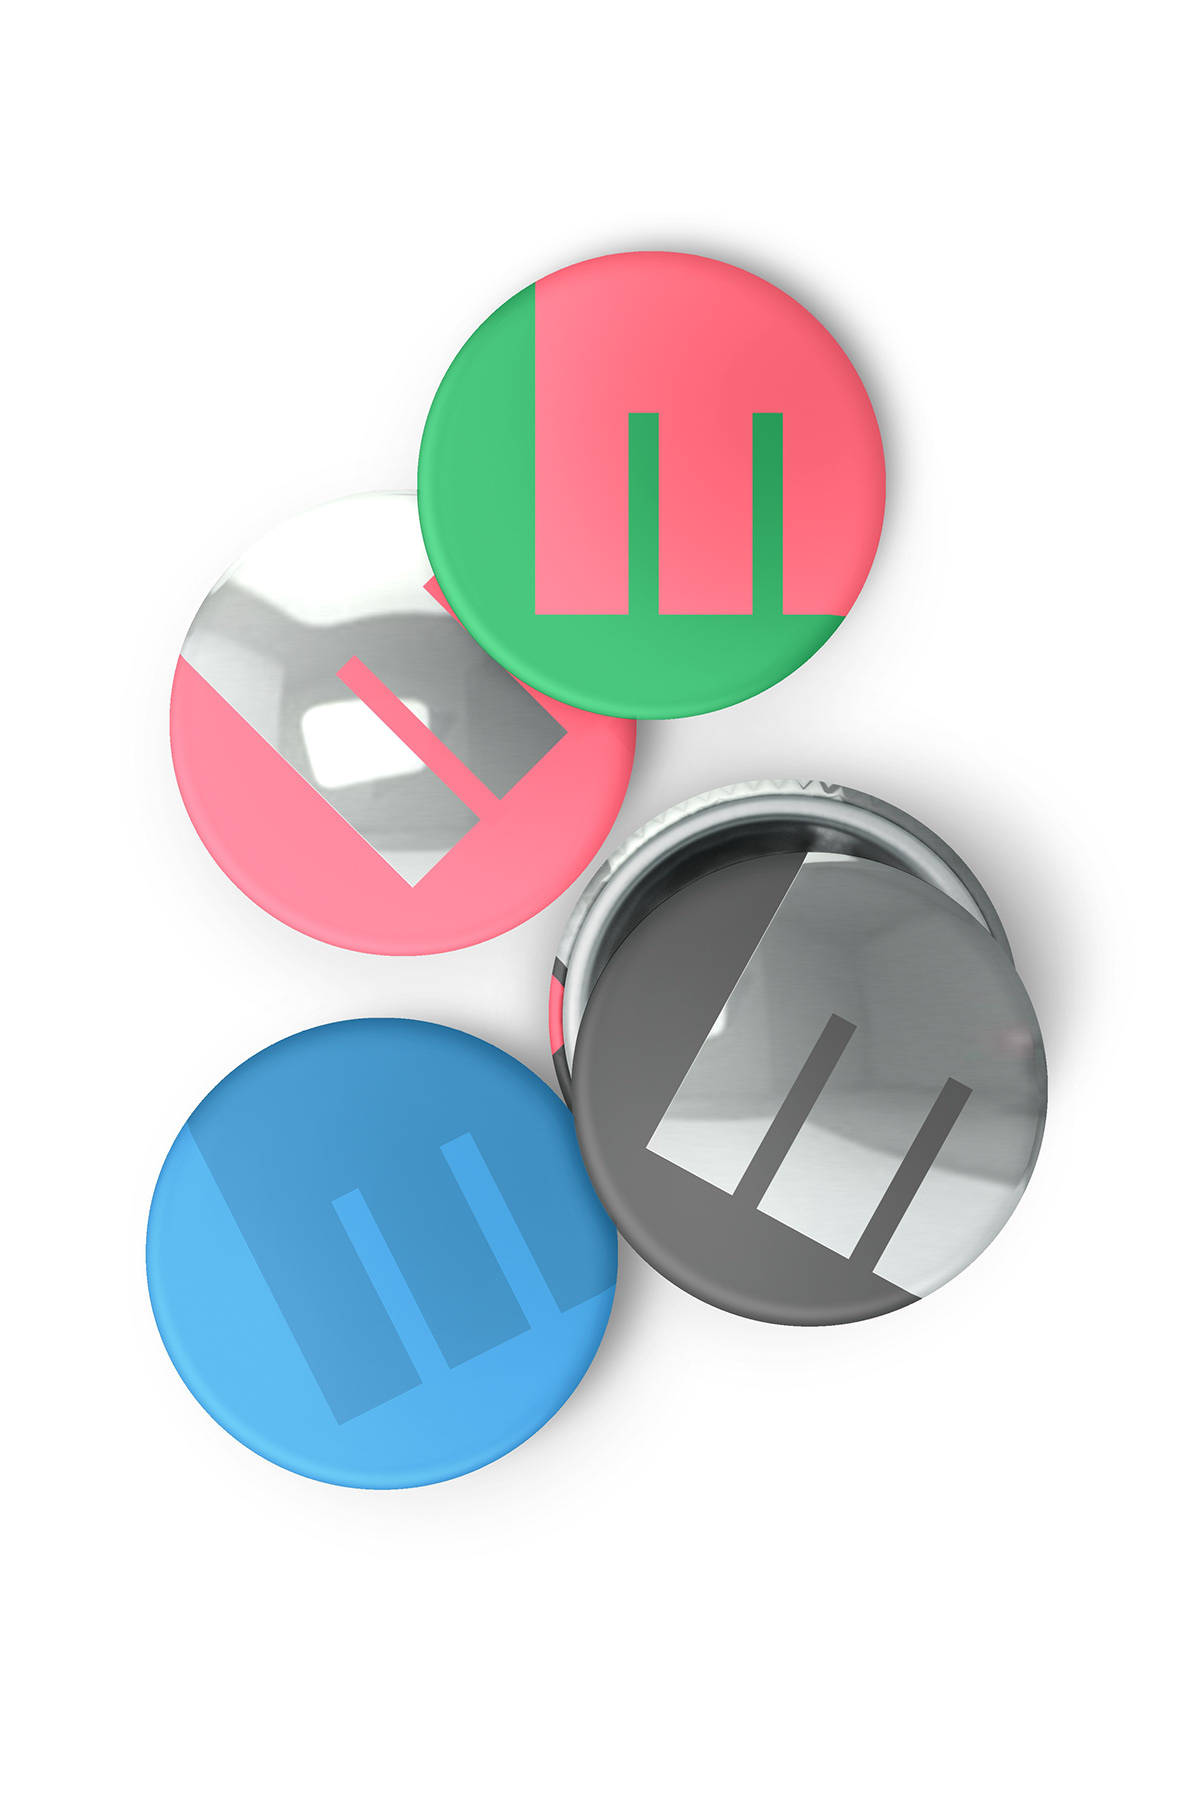 logo corporatedesign graphicdesign